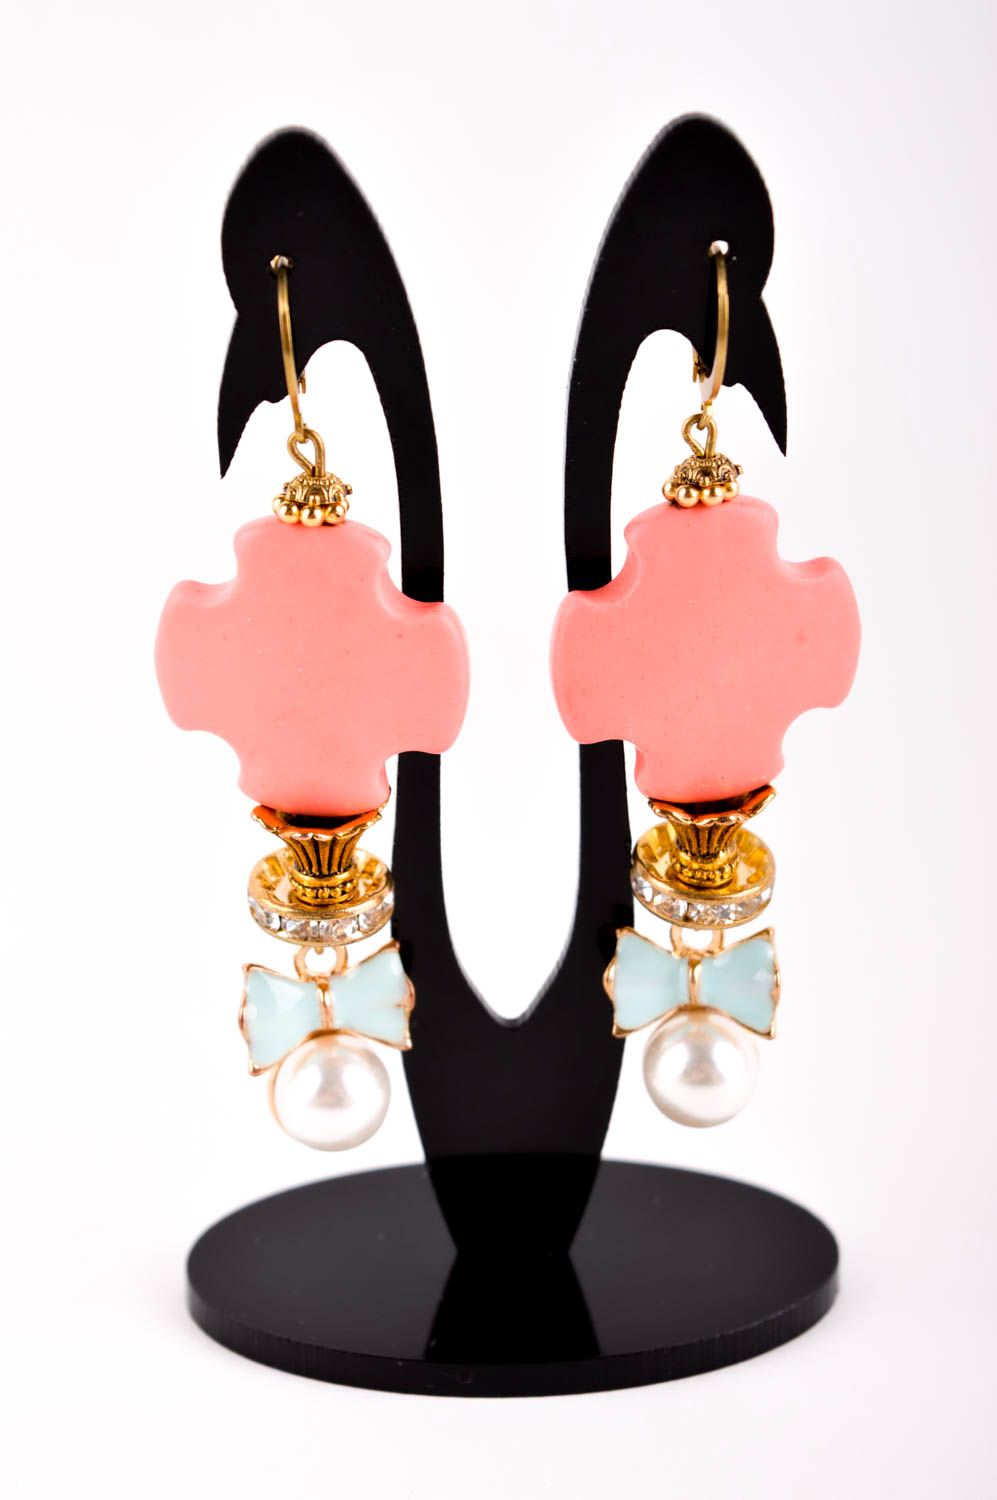 Handmade earrings designer earrings with charms pearl earrings for women photo 2